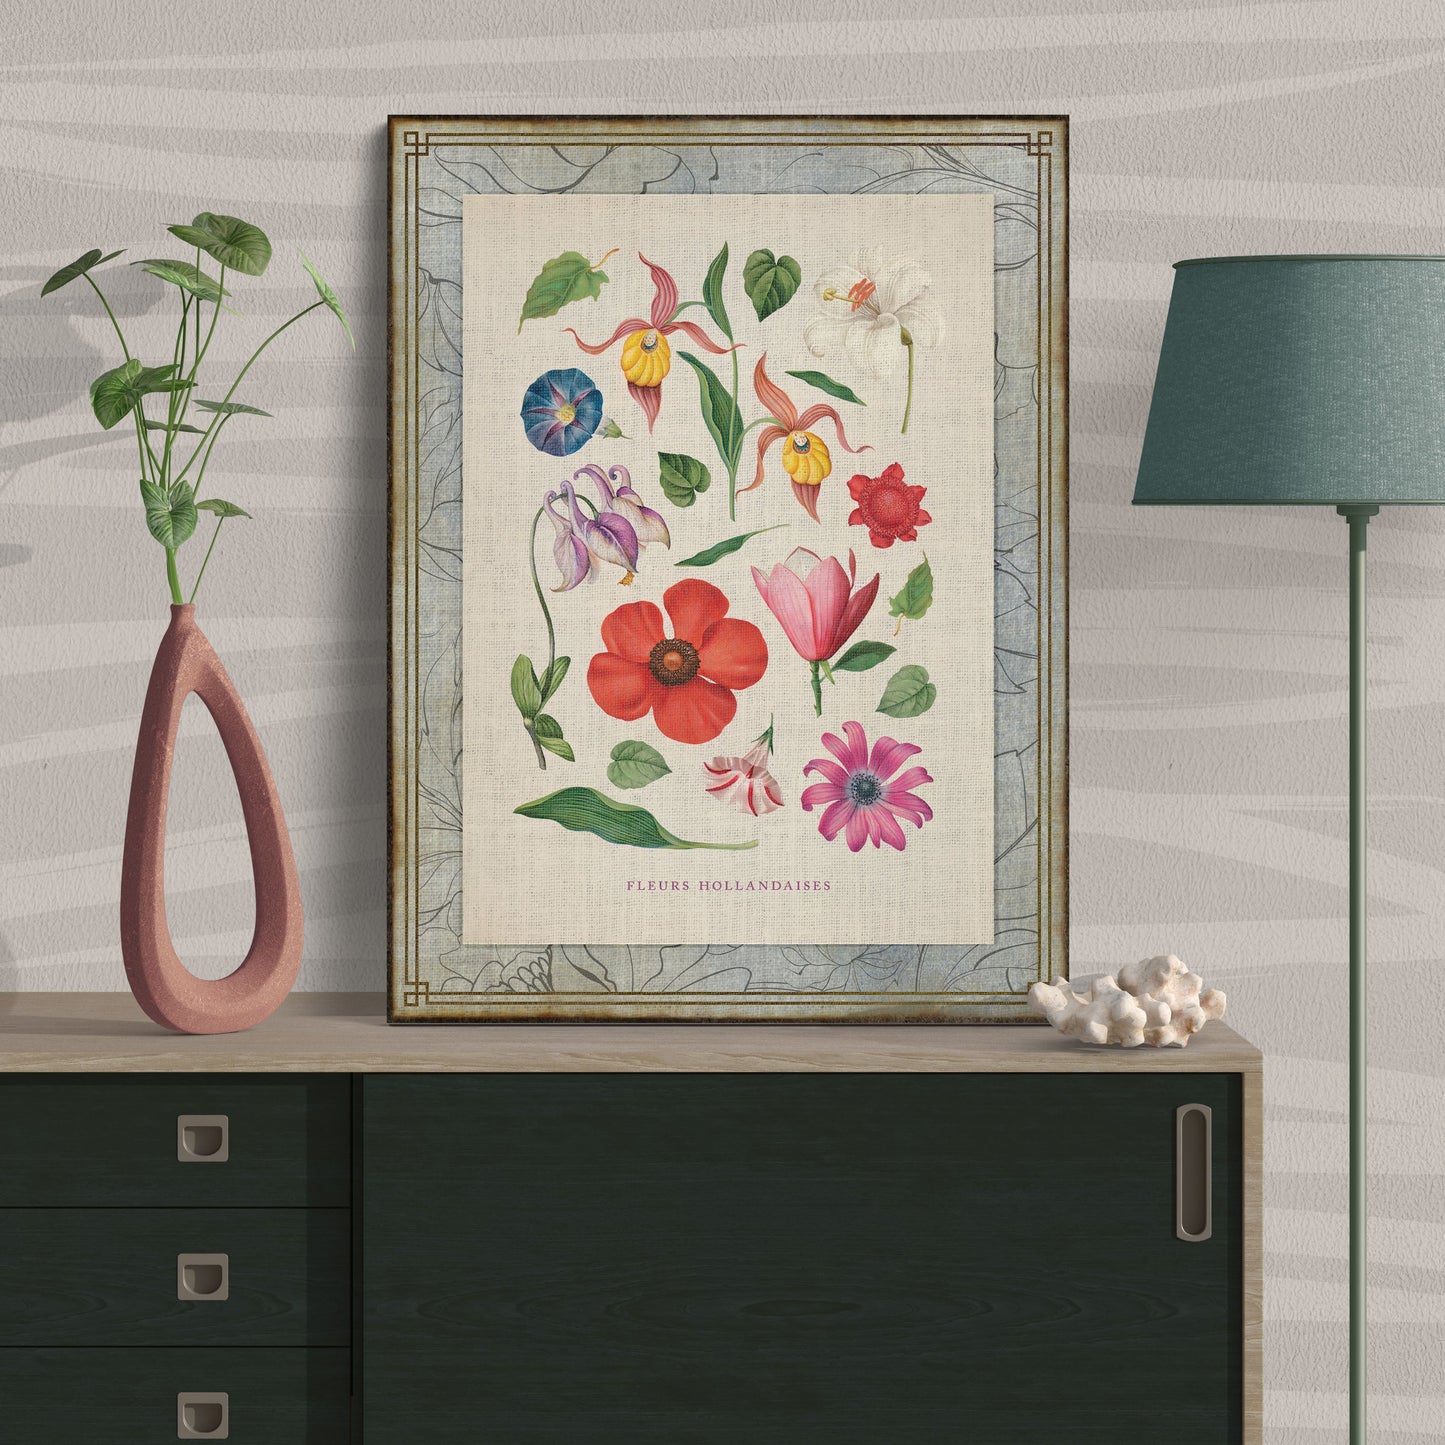 Hollandaise Flowers Vintage Botanical Illustration Floral Art - Retro Reverence